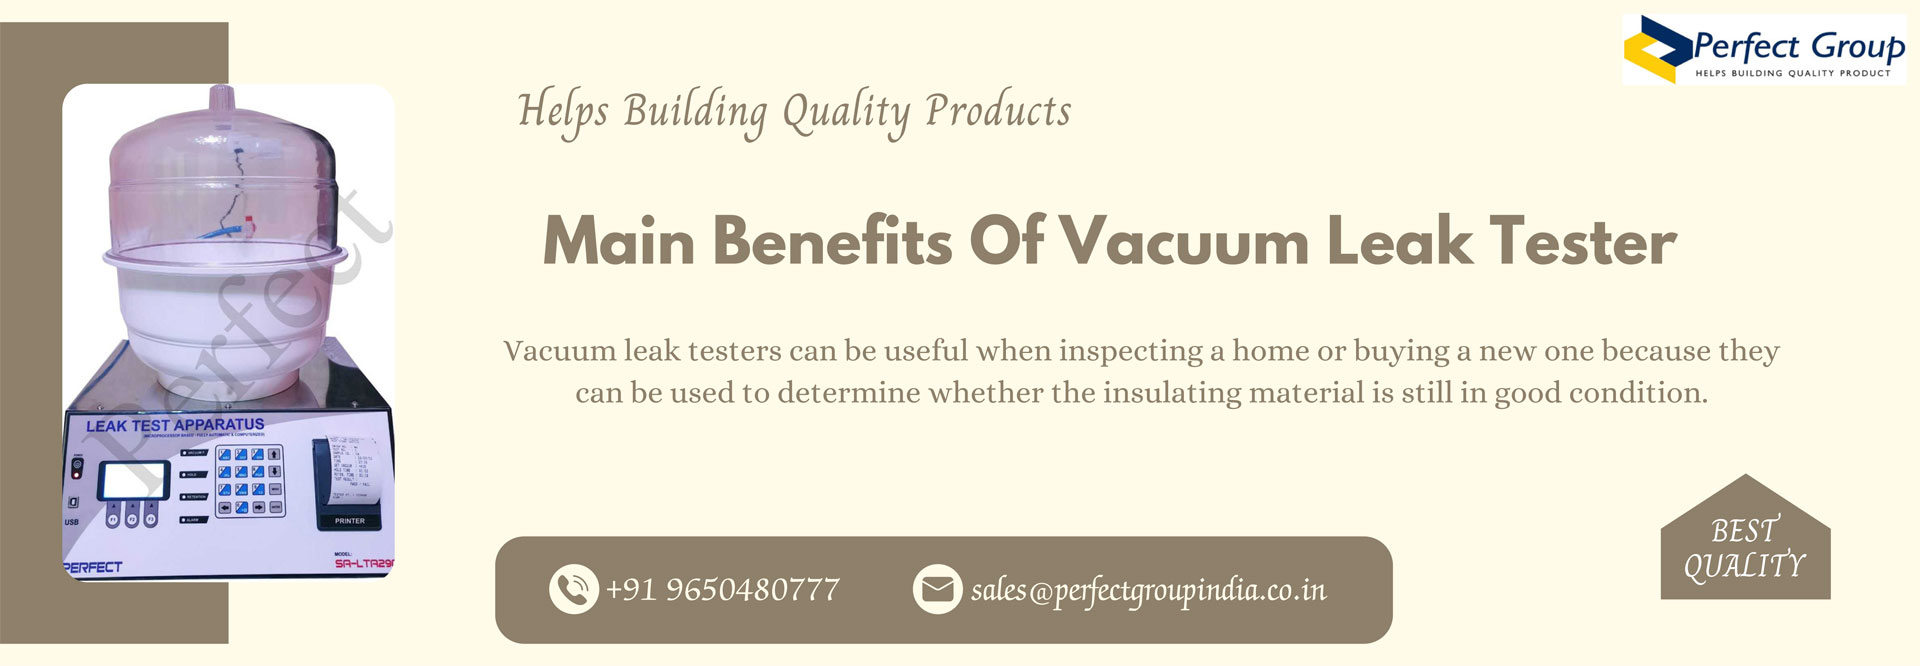 Main Benefits Of Vacuum Leak Tester